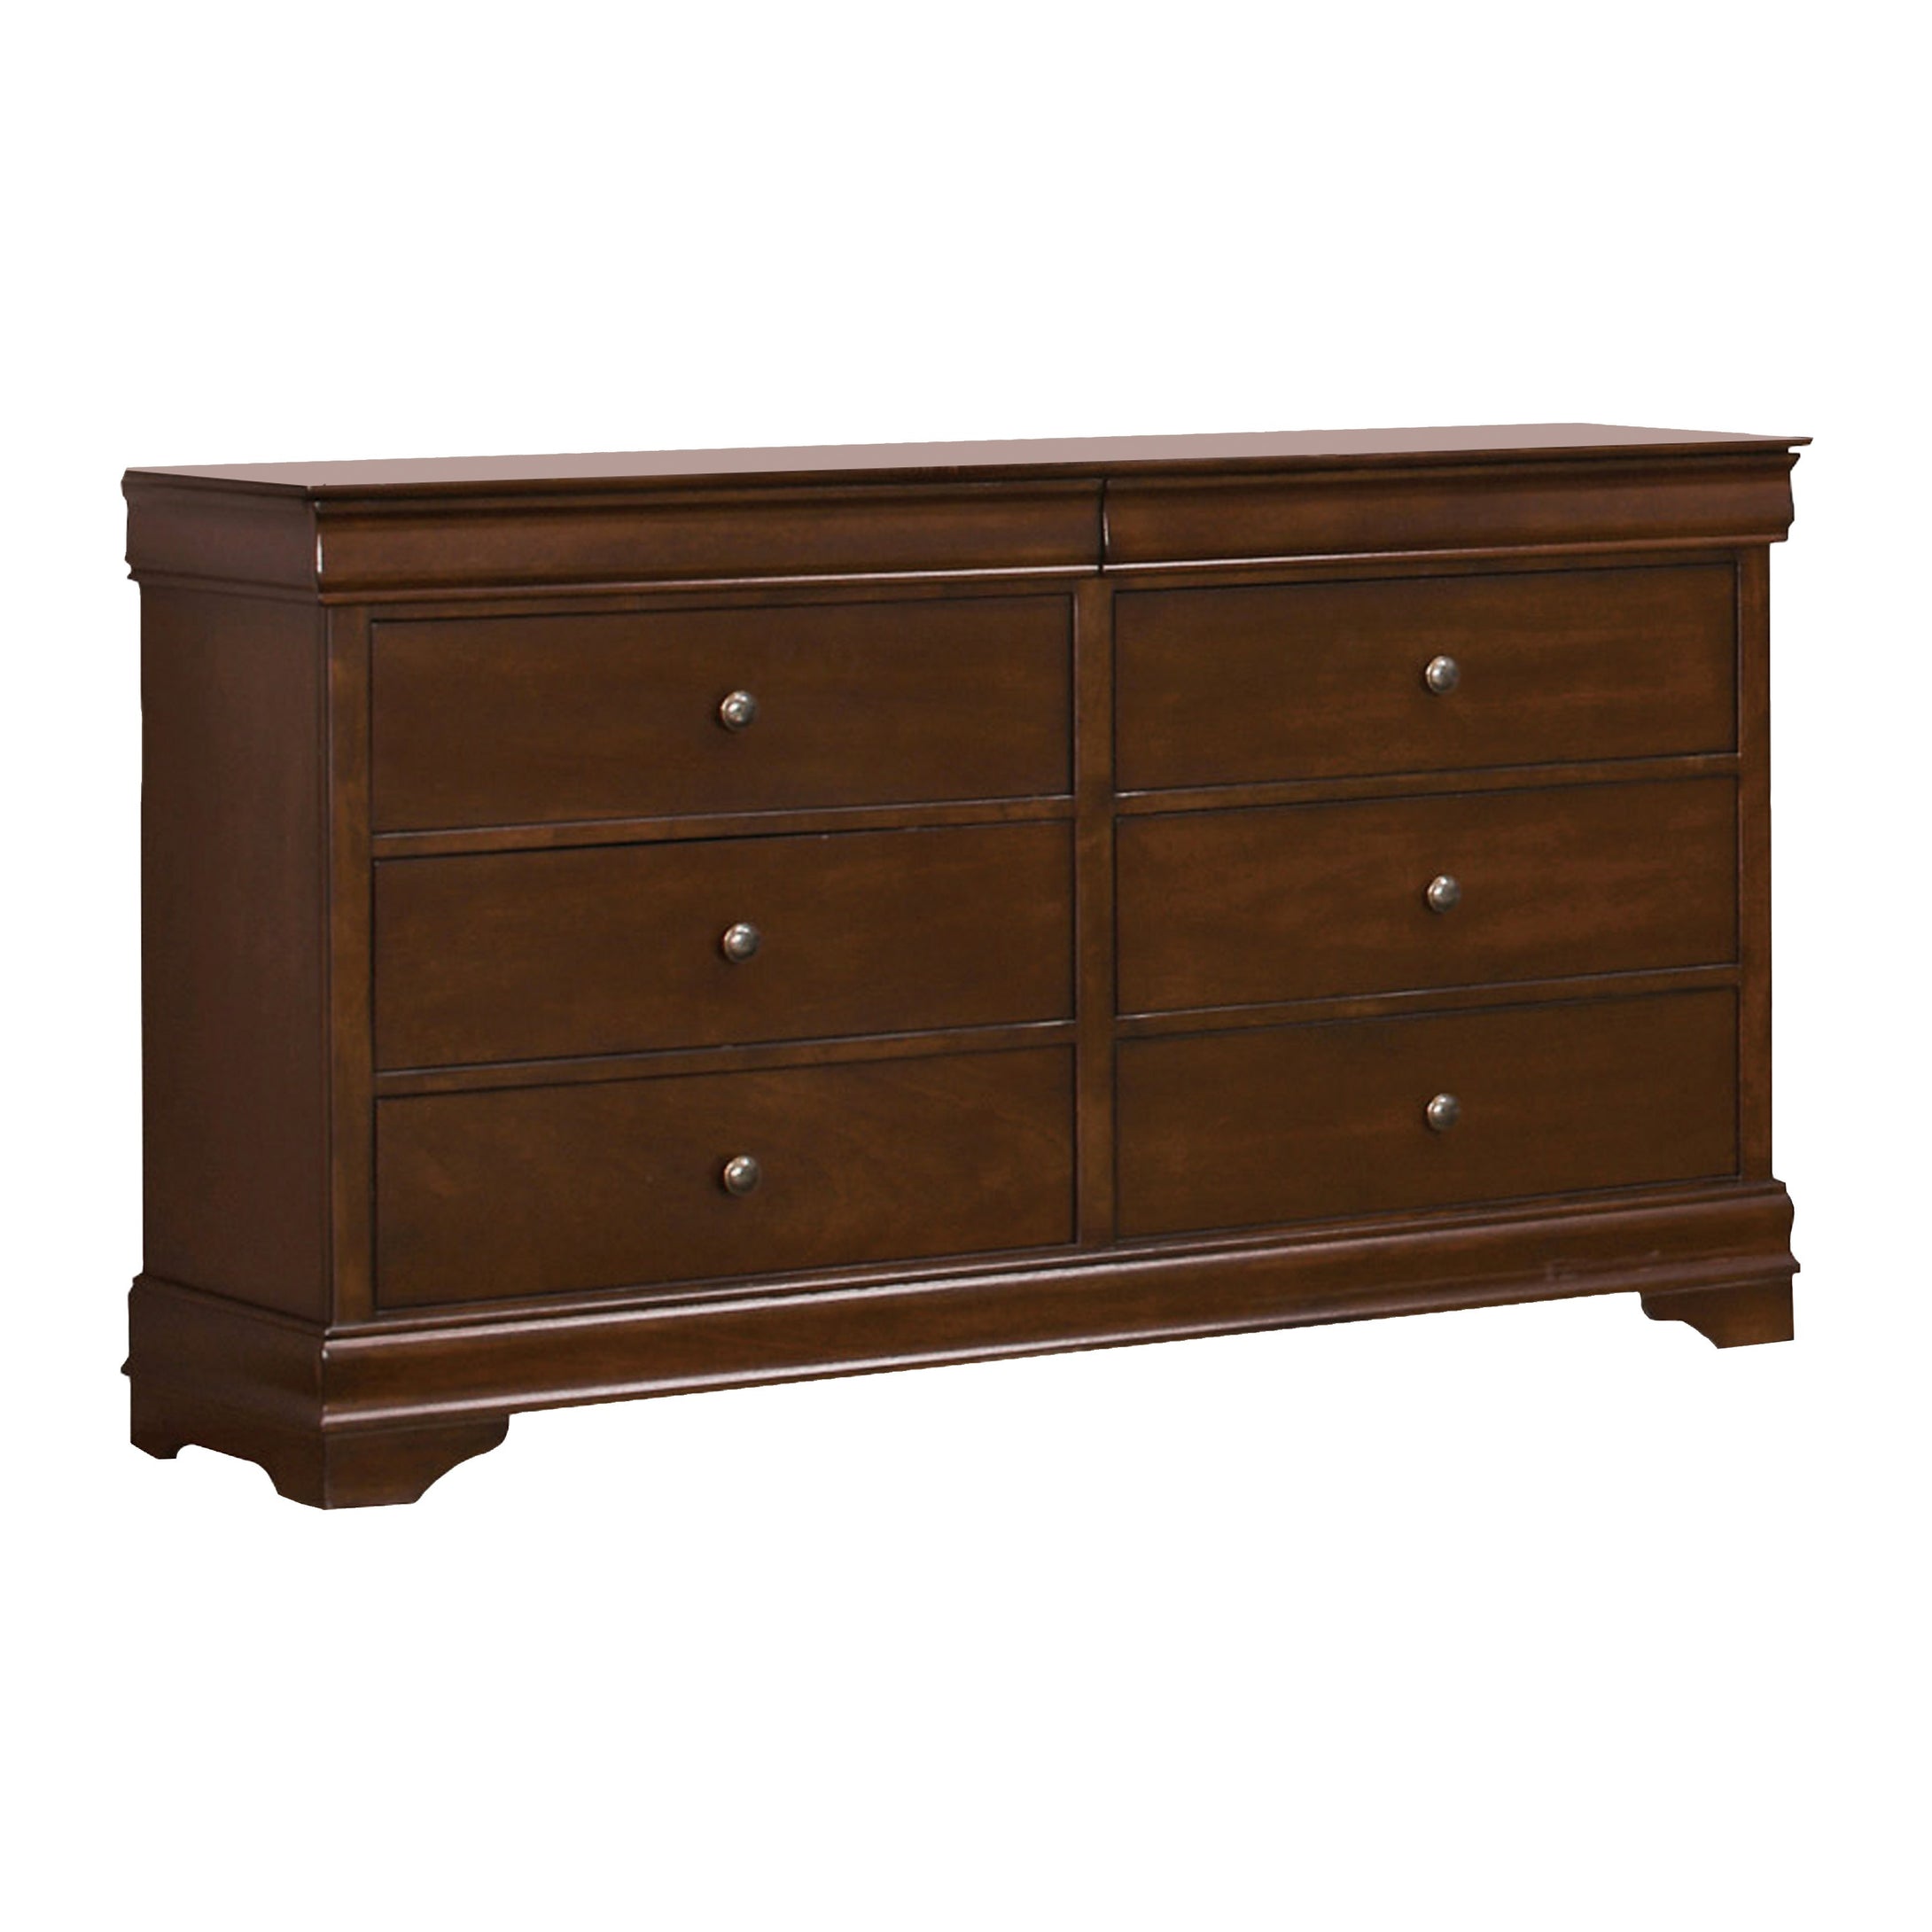 1856-5 Dresser, Two Hidden Drawers